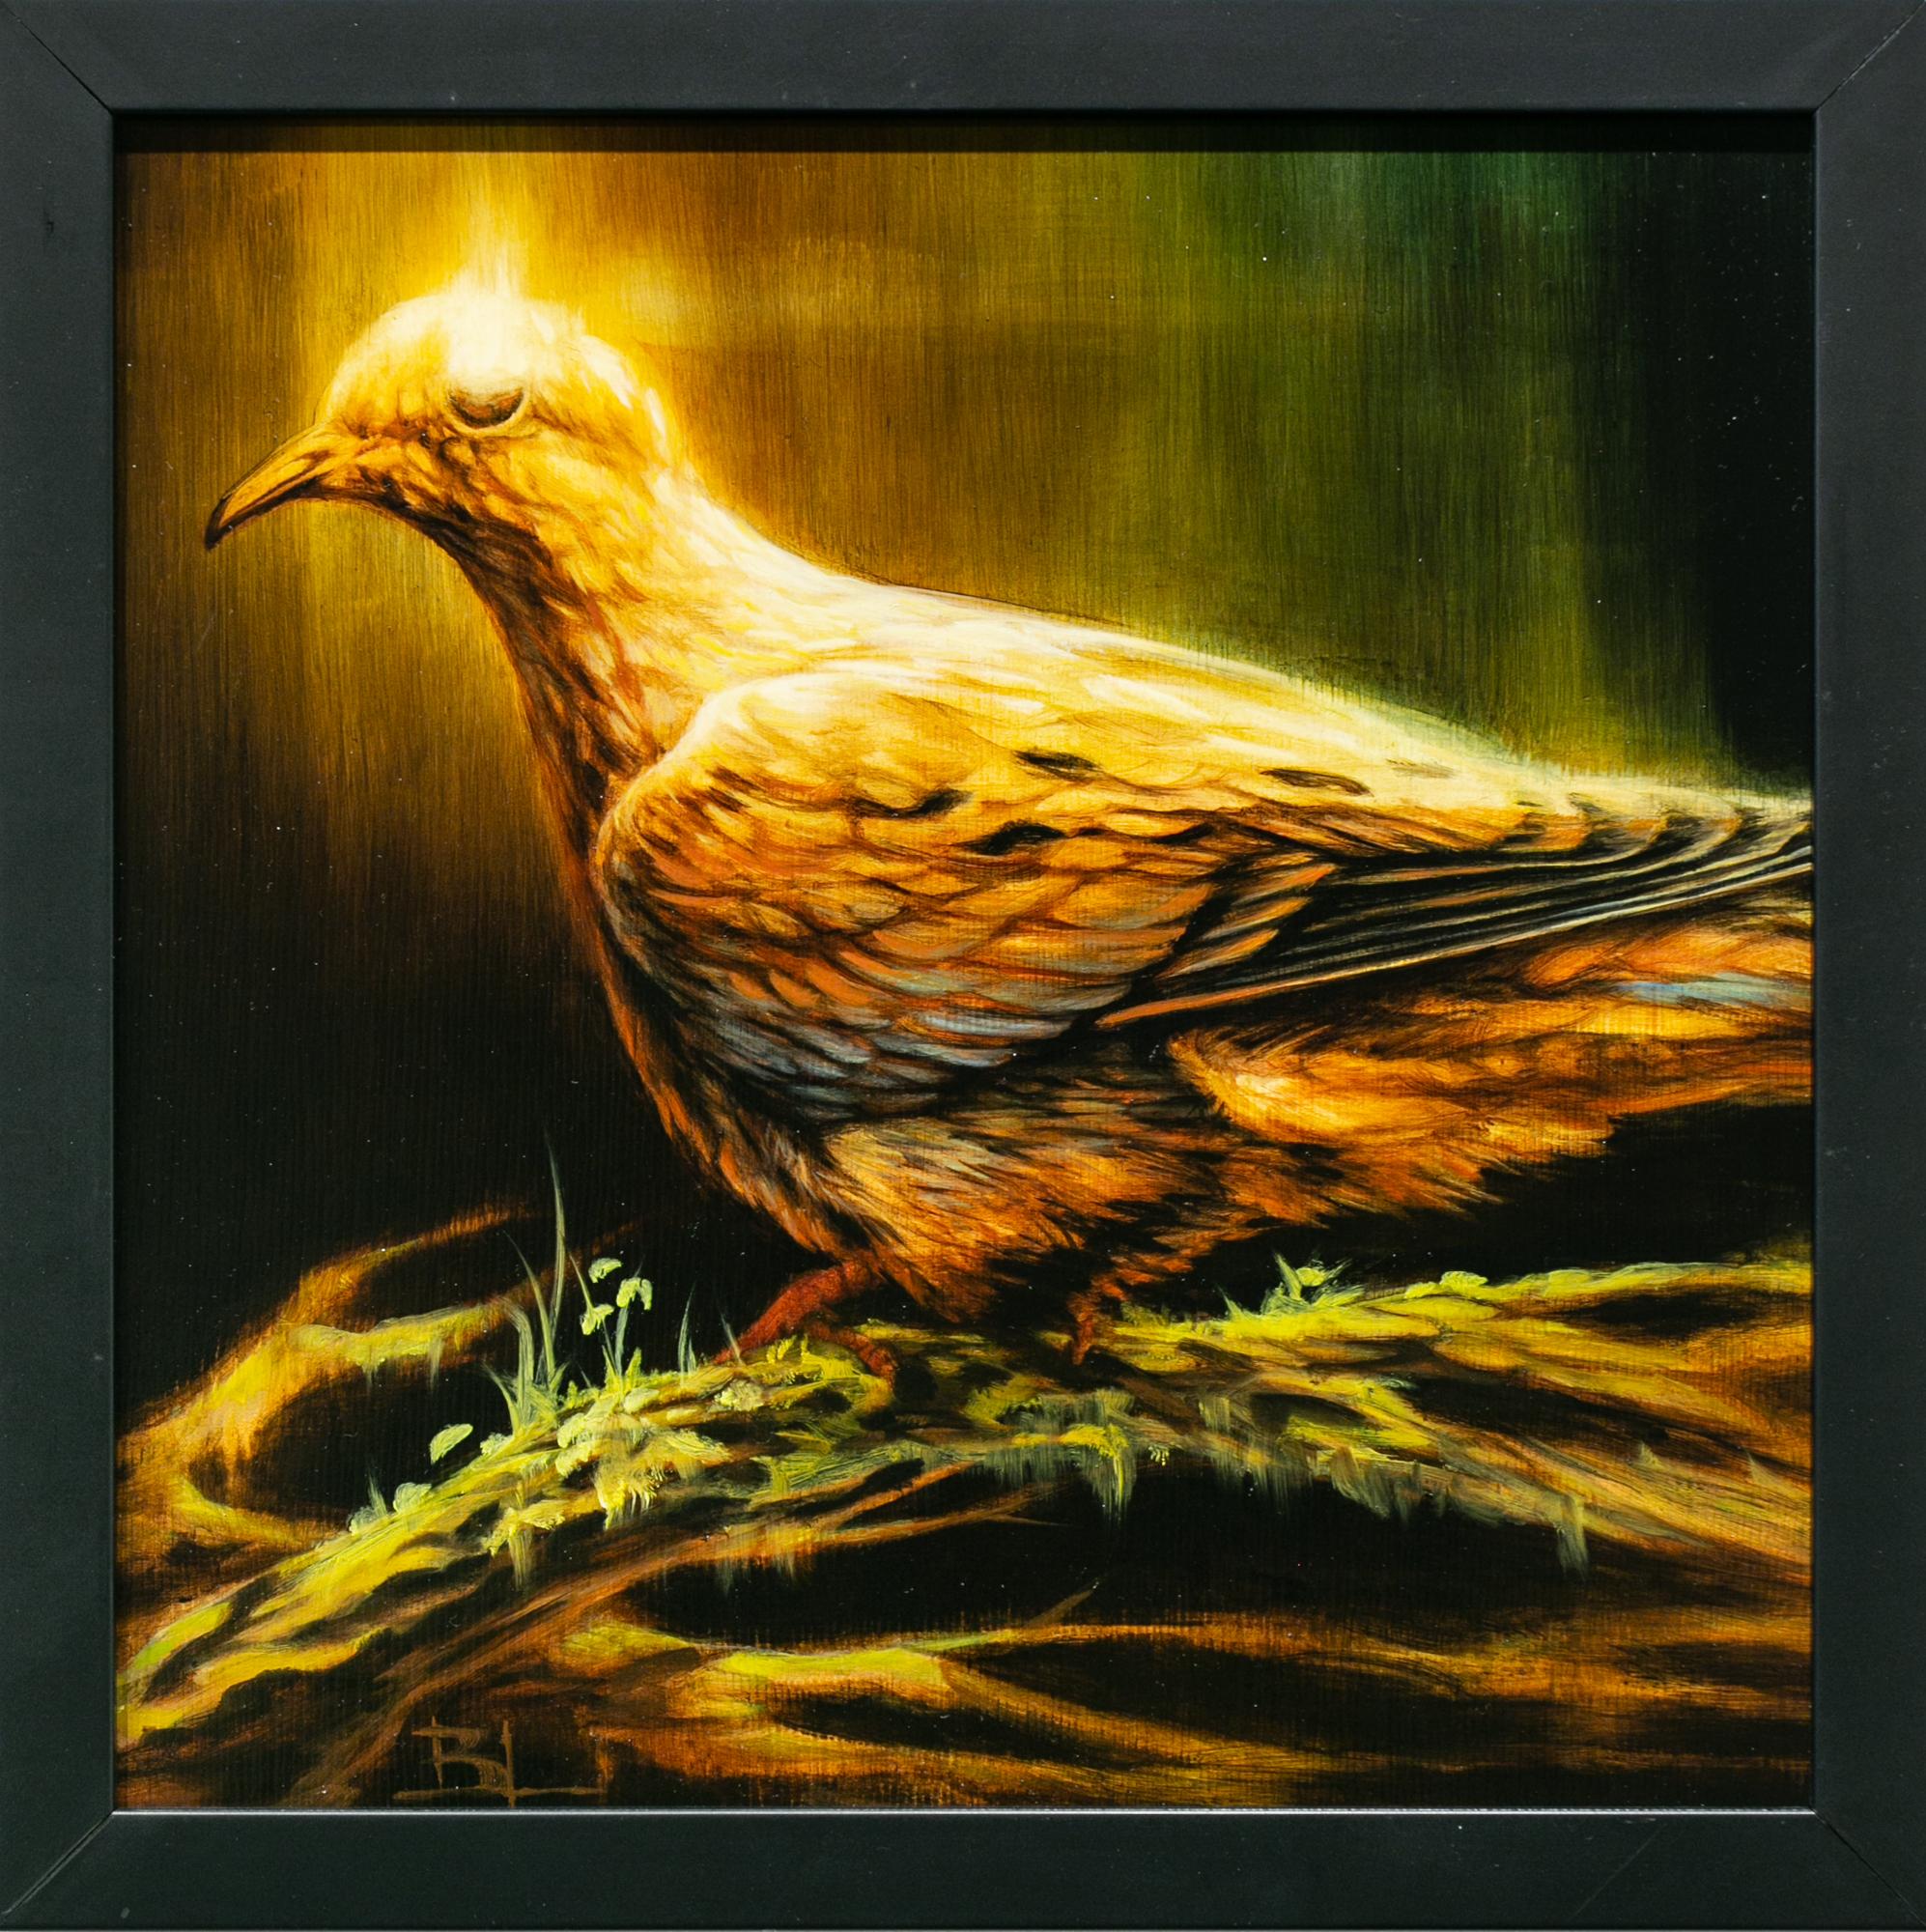 Brin Levinson Figurative Painting - "Rain Dove", Figurative Oil Painting, Bird, Animal, Nature